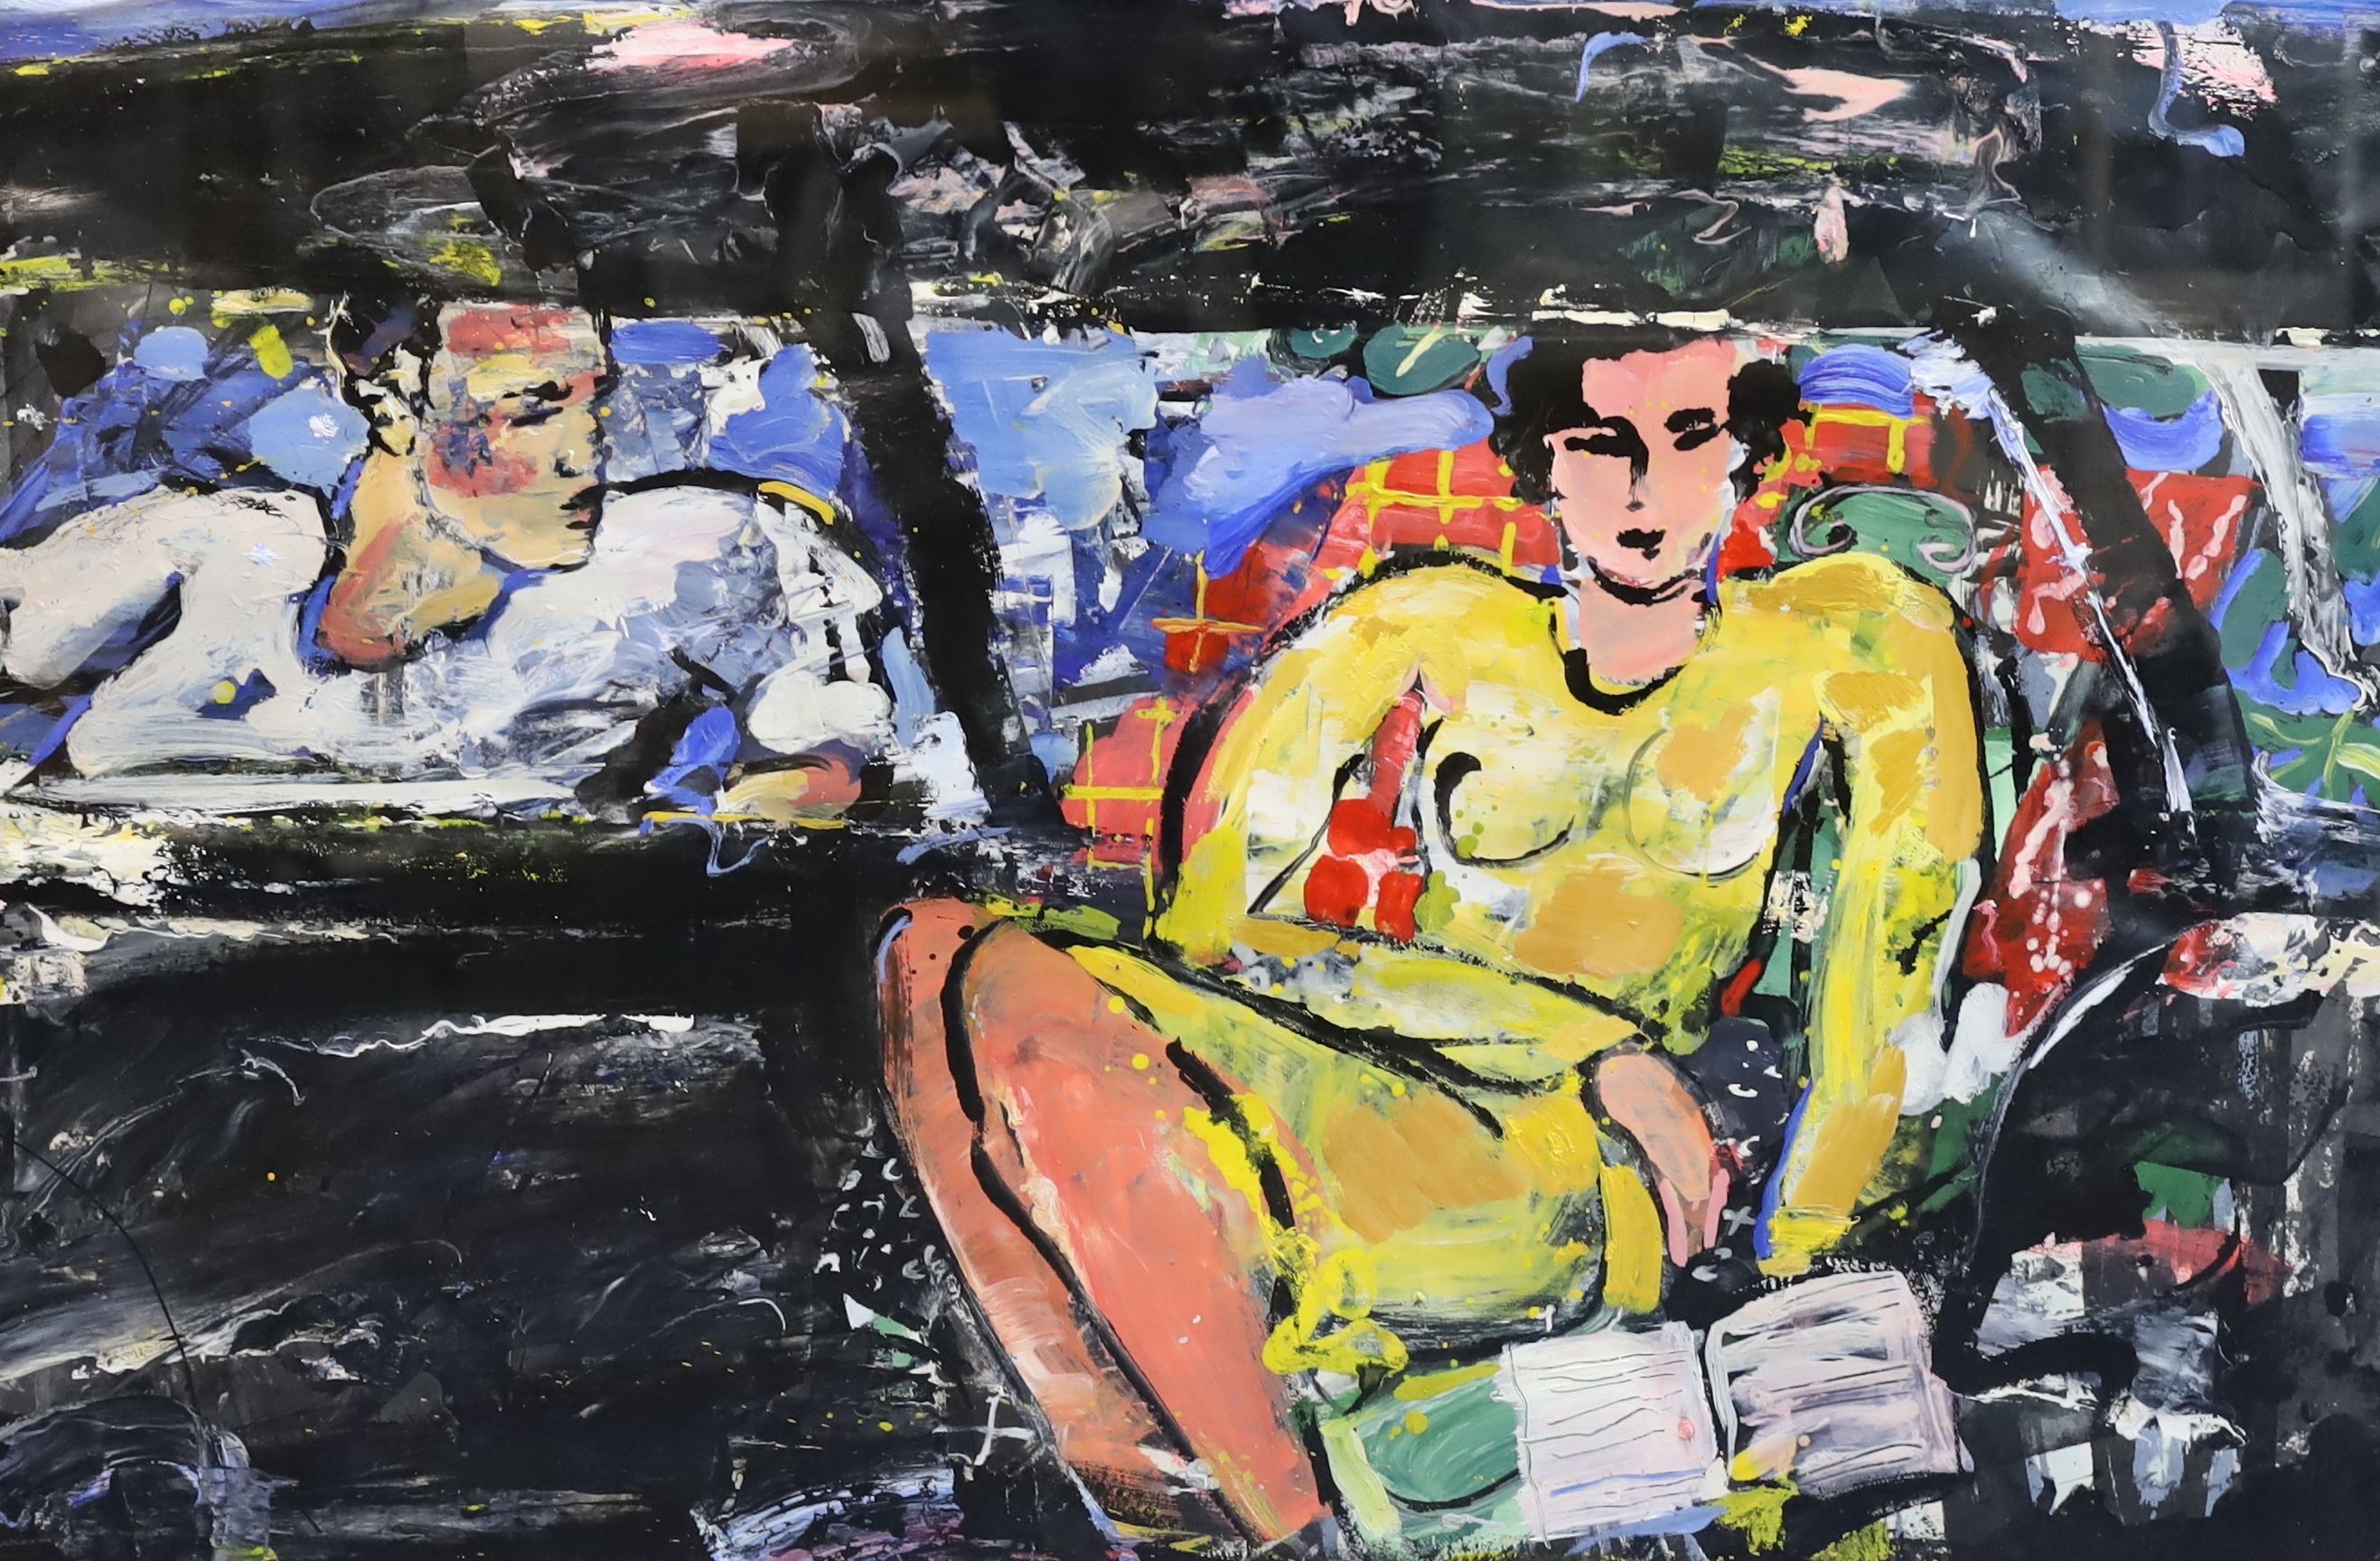 Peter McClaren (Scottish, 1964-), 'Matisse, woman in car', oil on paper, 58 x 88cm.